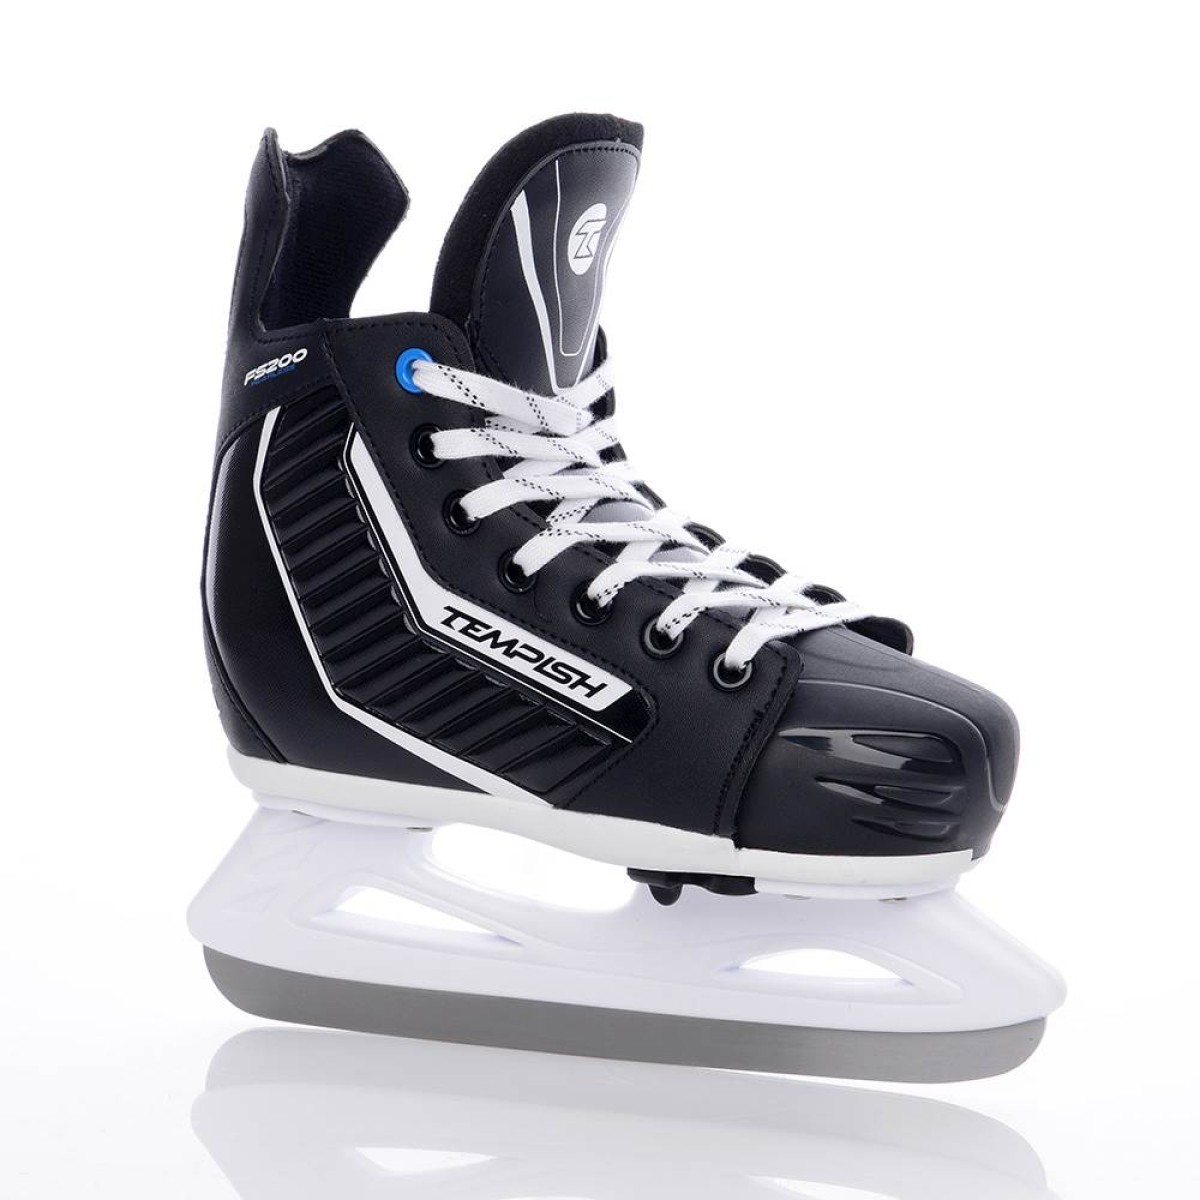 FS 200 adjustable hockey skate TEMPISH - view 18